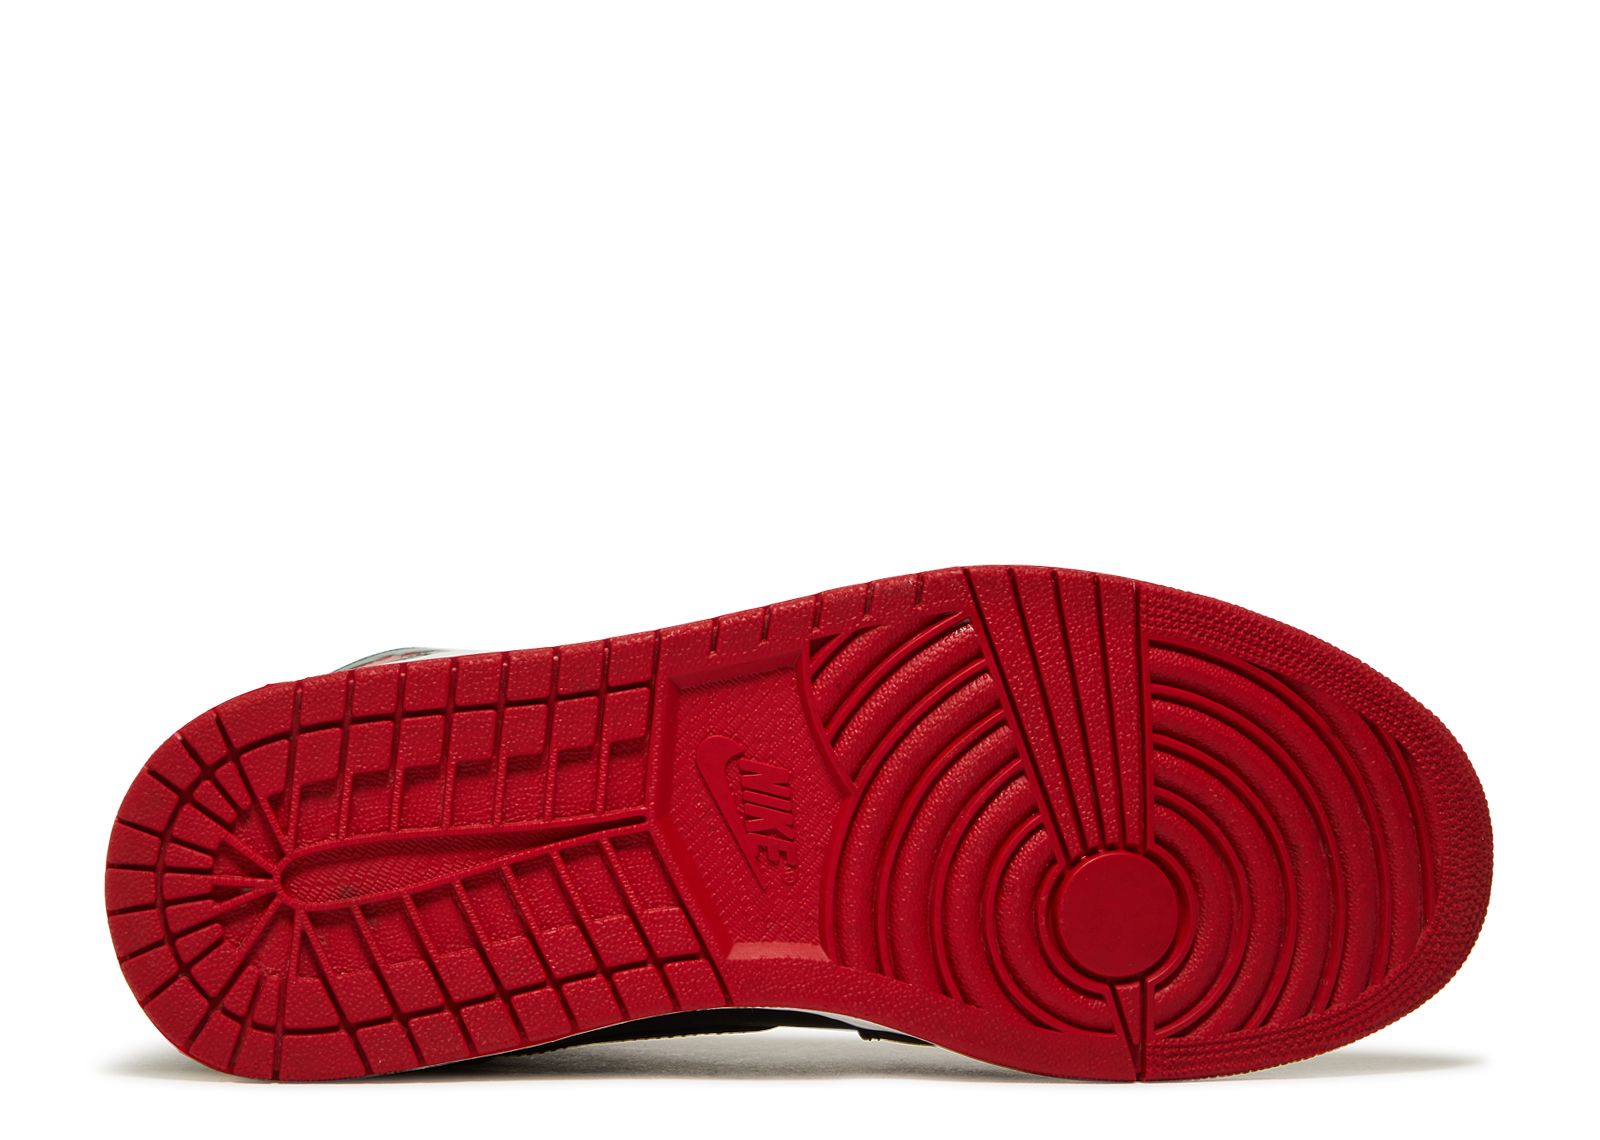 Buy Air Jordan 1 Retro High 'Gucci' - 332550 025